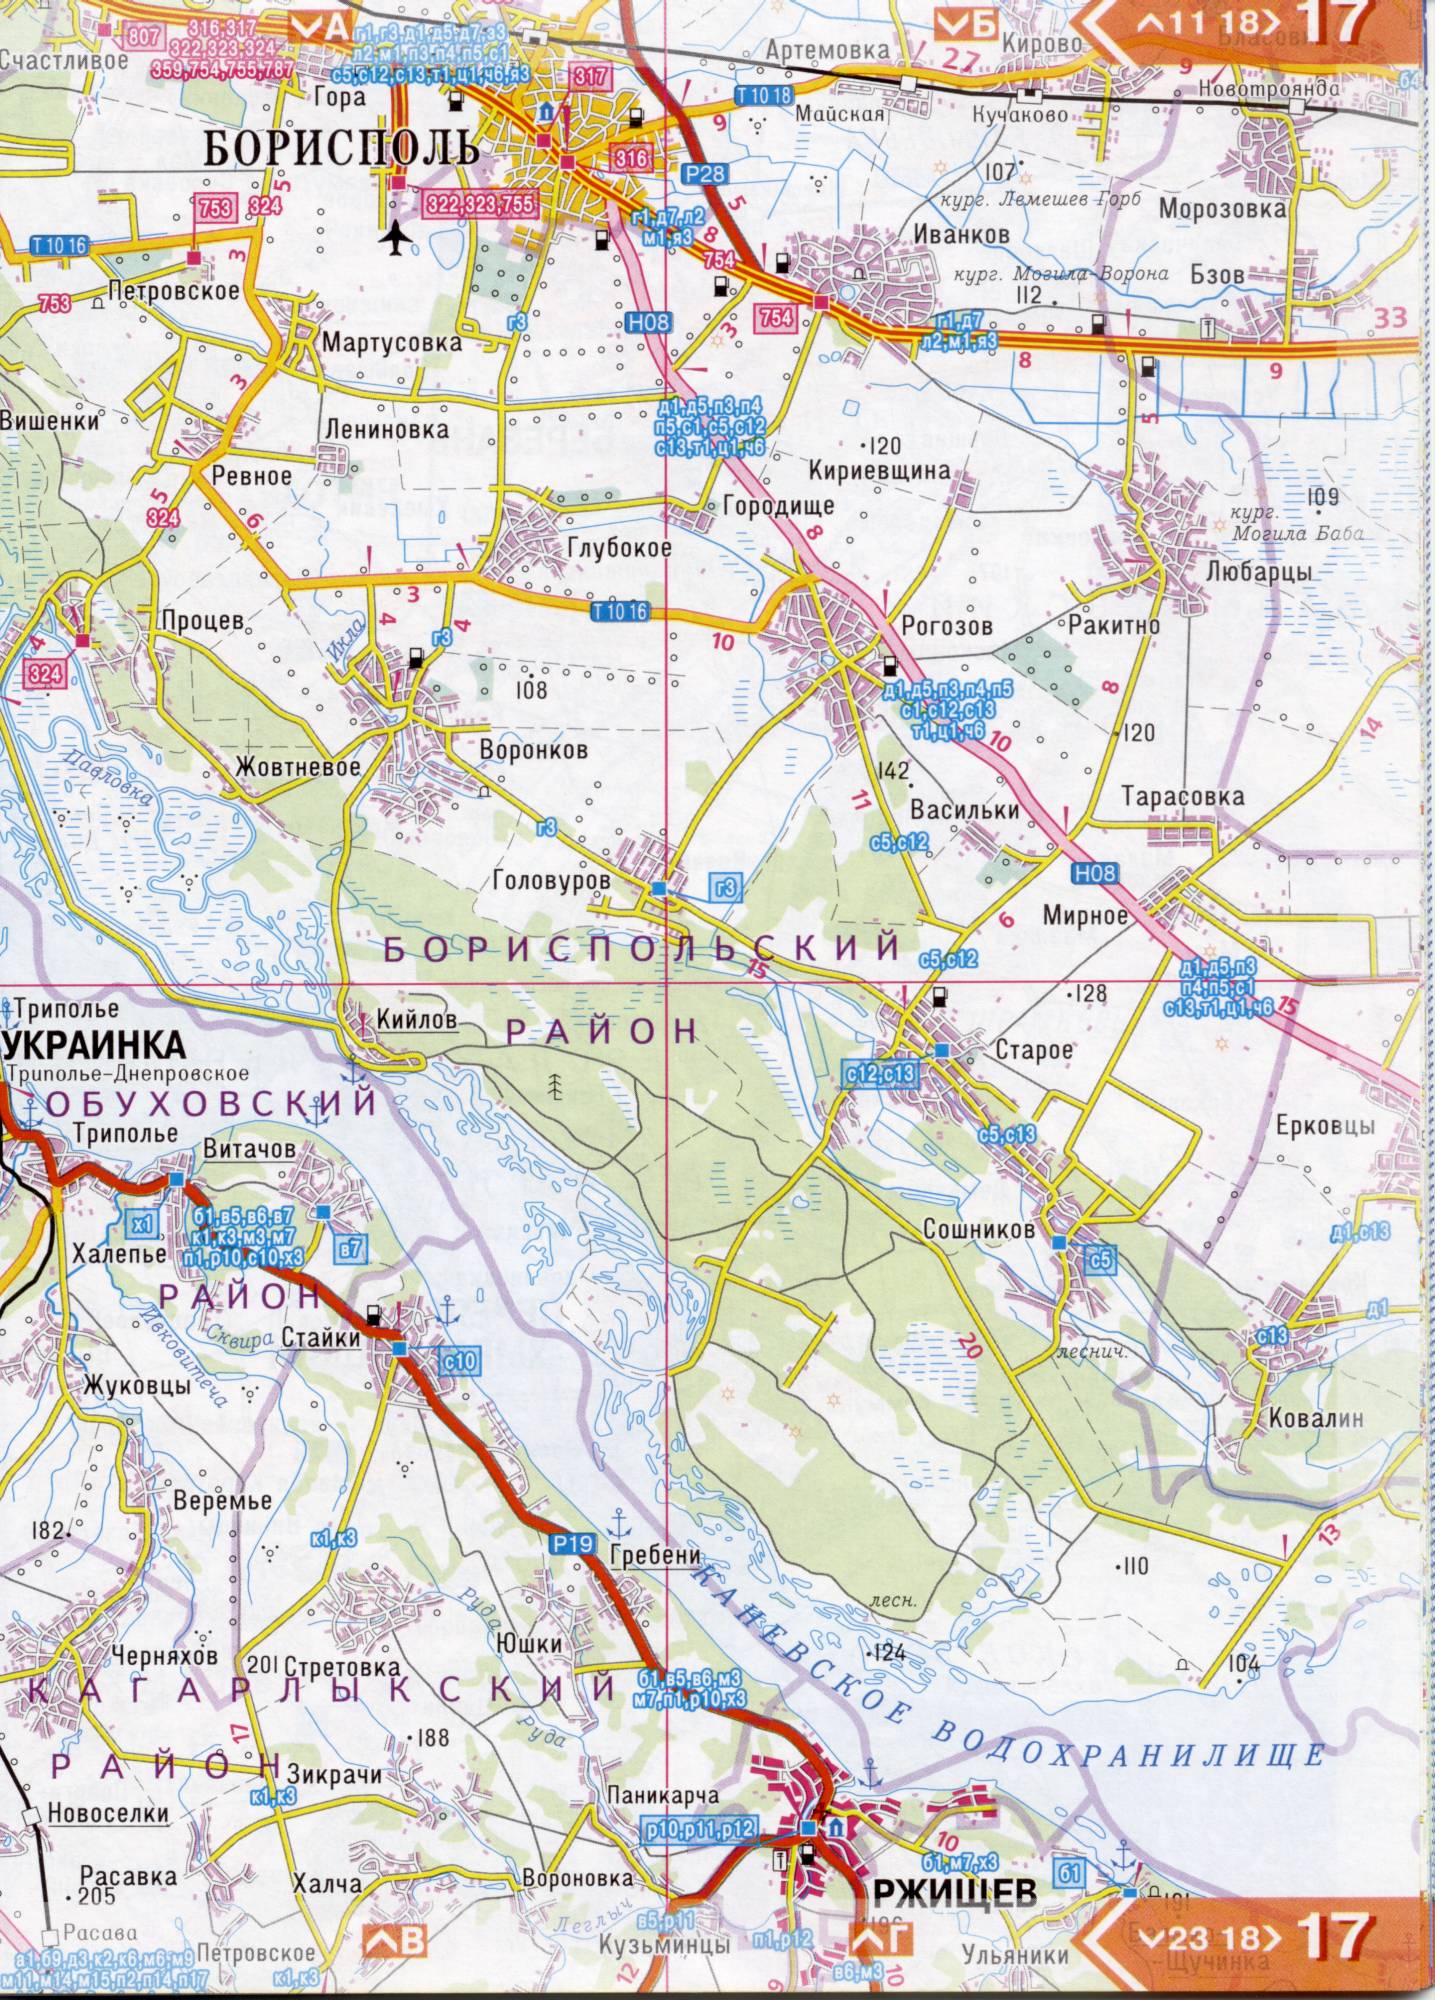 Atlas of the Kiev region. Detailed map of the Kiev region from the road atlas. Kiev region on a detailed map of scale 1cm = 3km. Free Download, D3 - Borispol